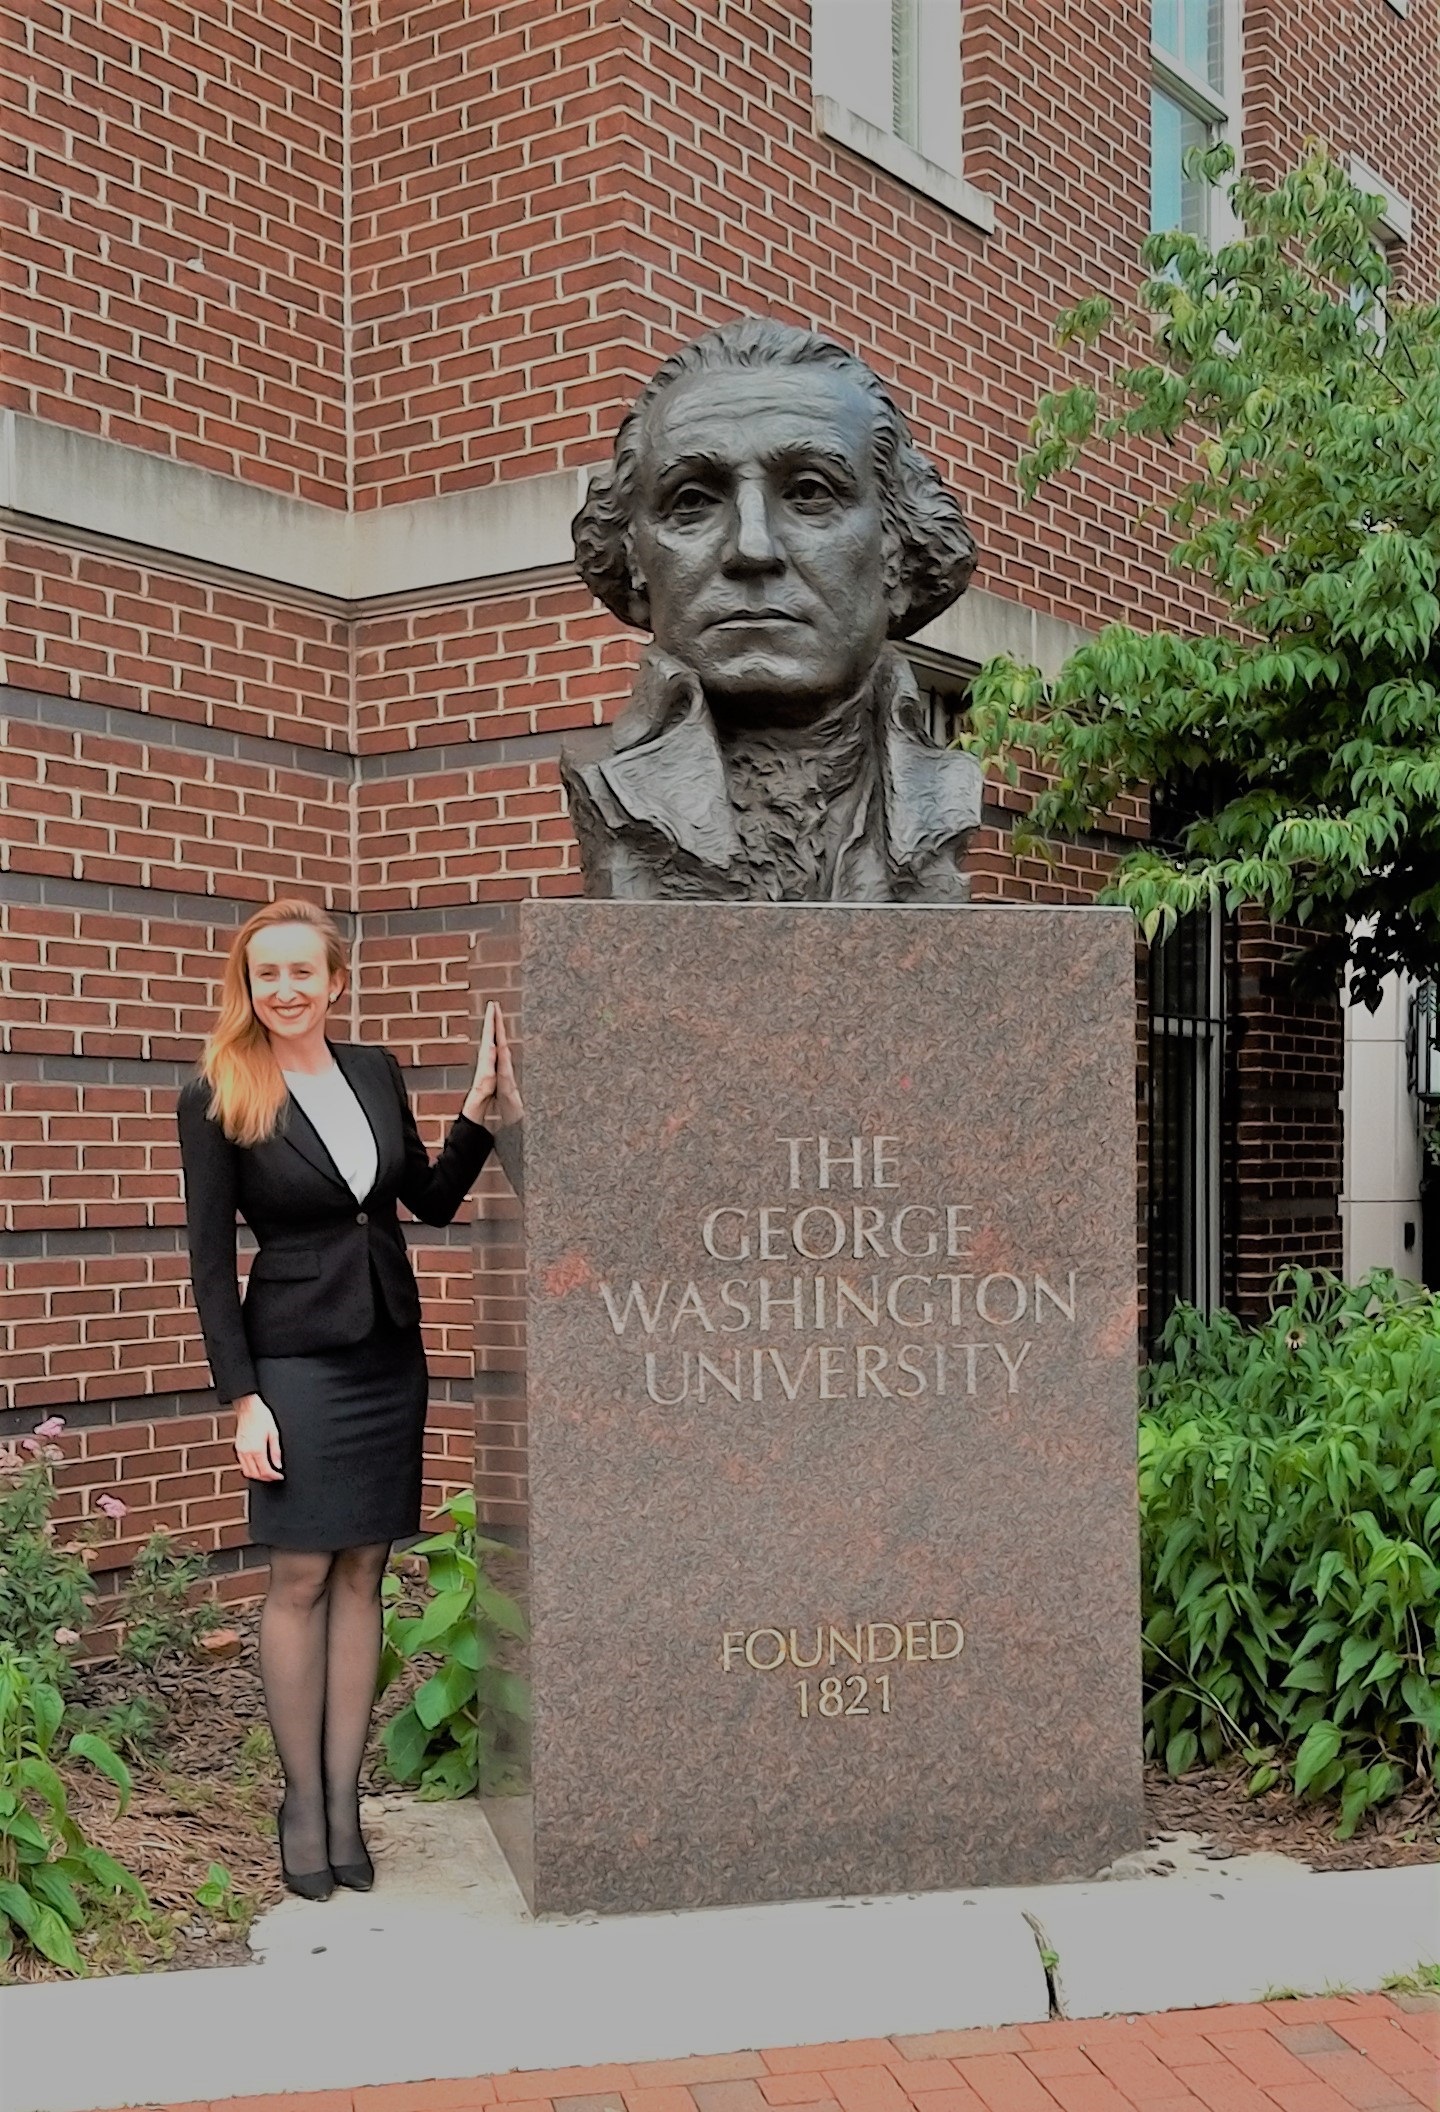 George Washington University, Julia M. Puaschunder, Center for International Business Education and Research Fellowship